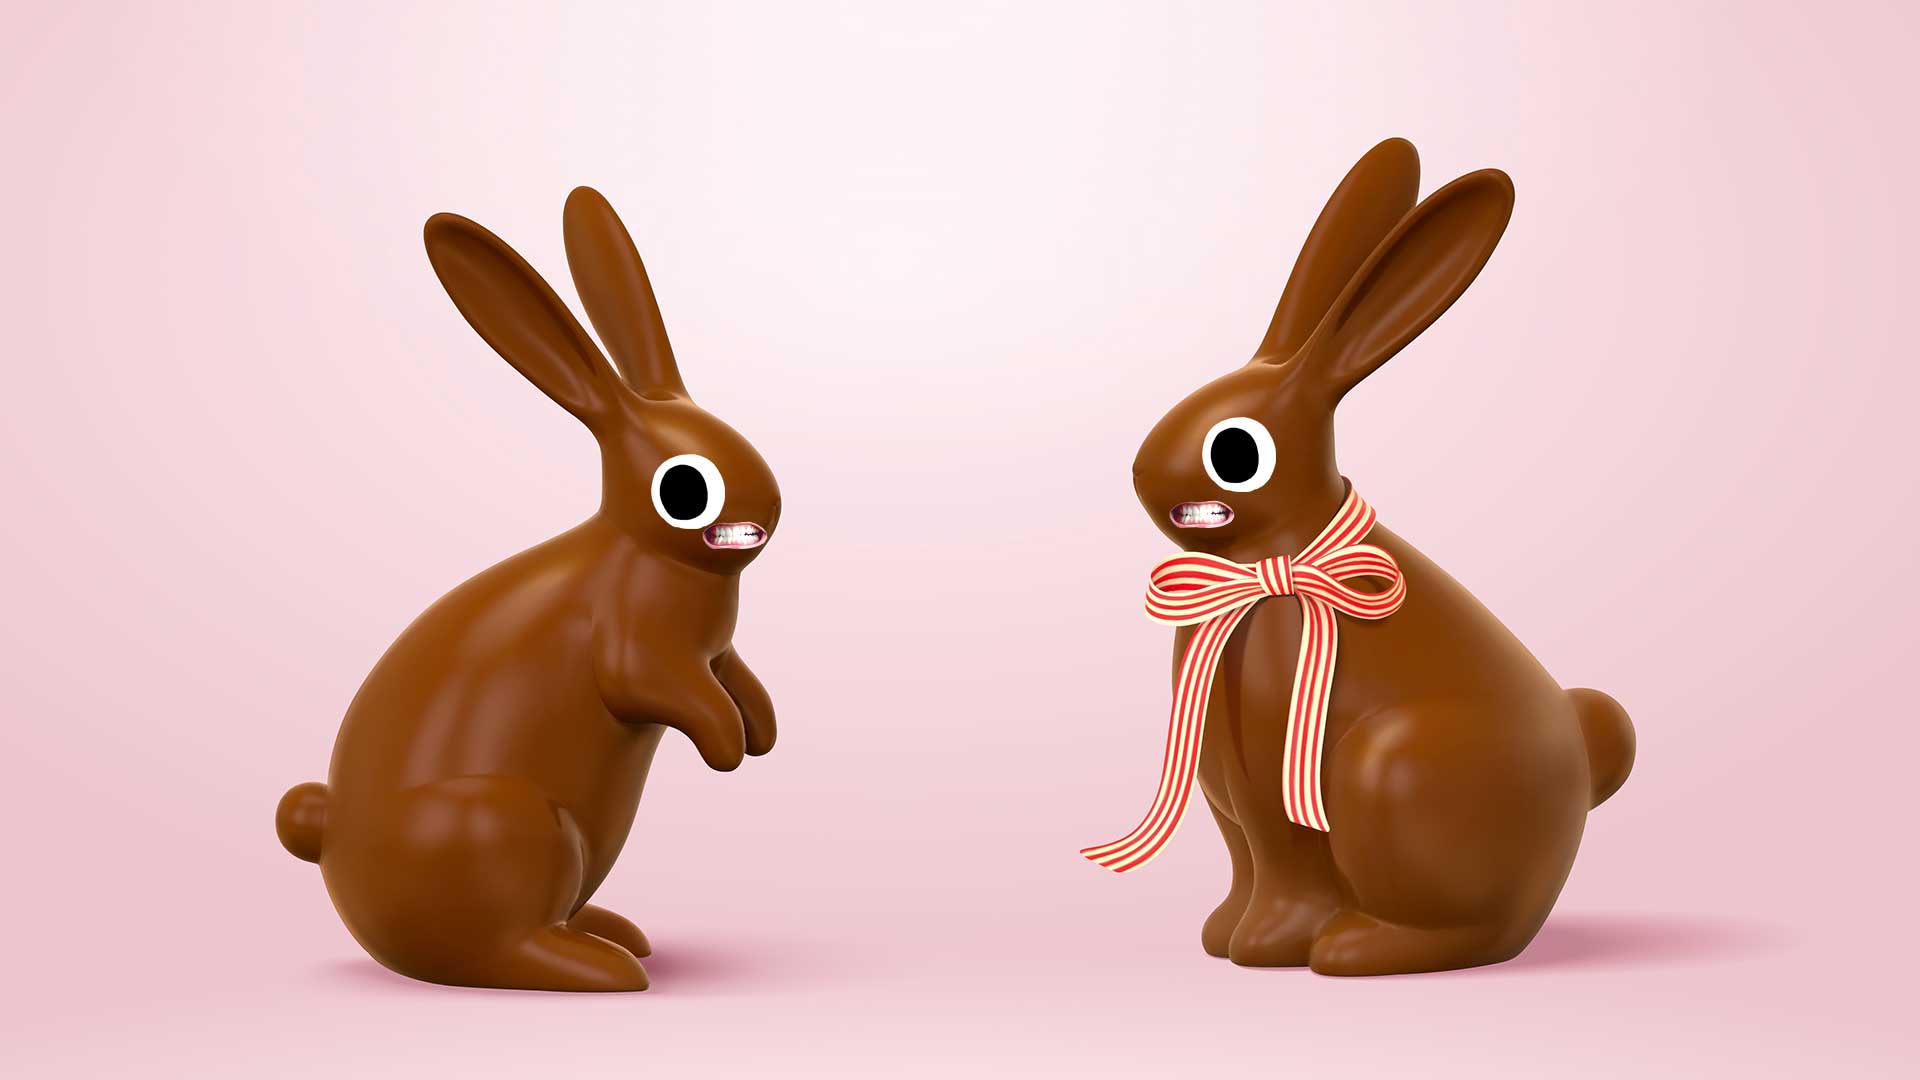 Two chocolate rabbits